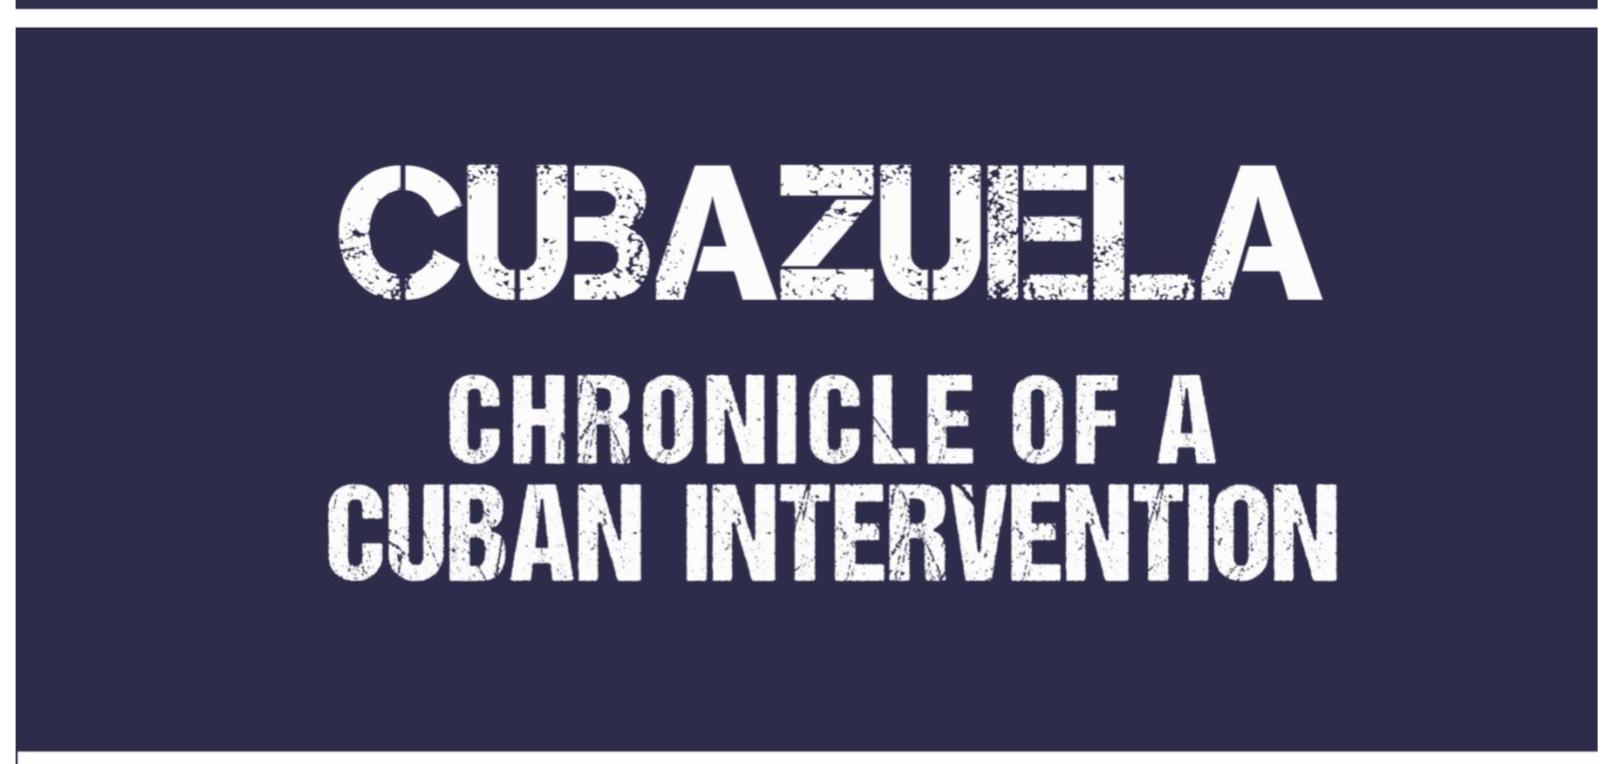 Cubazuela: Chronicle of a Cuban Intervention